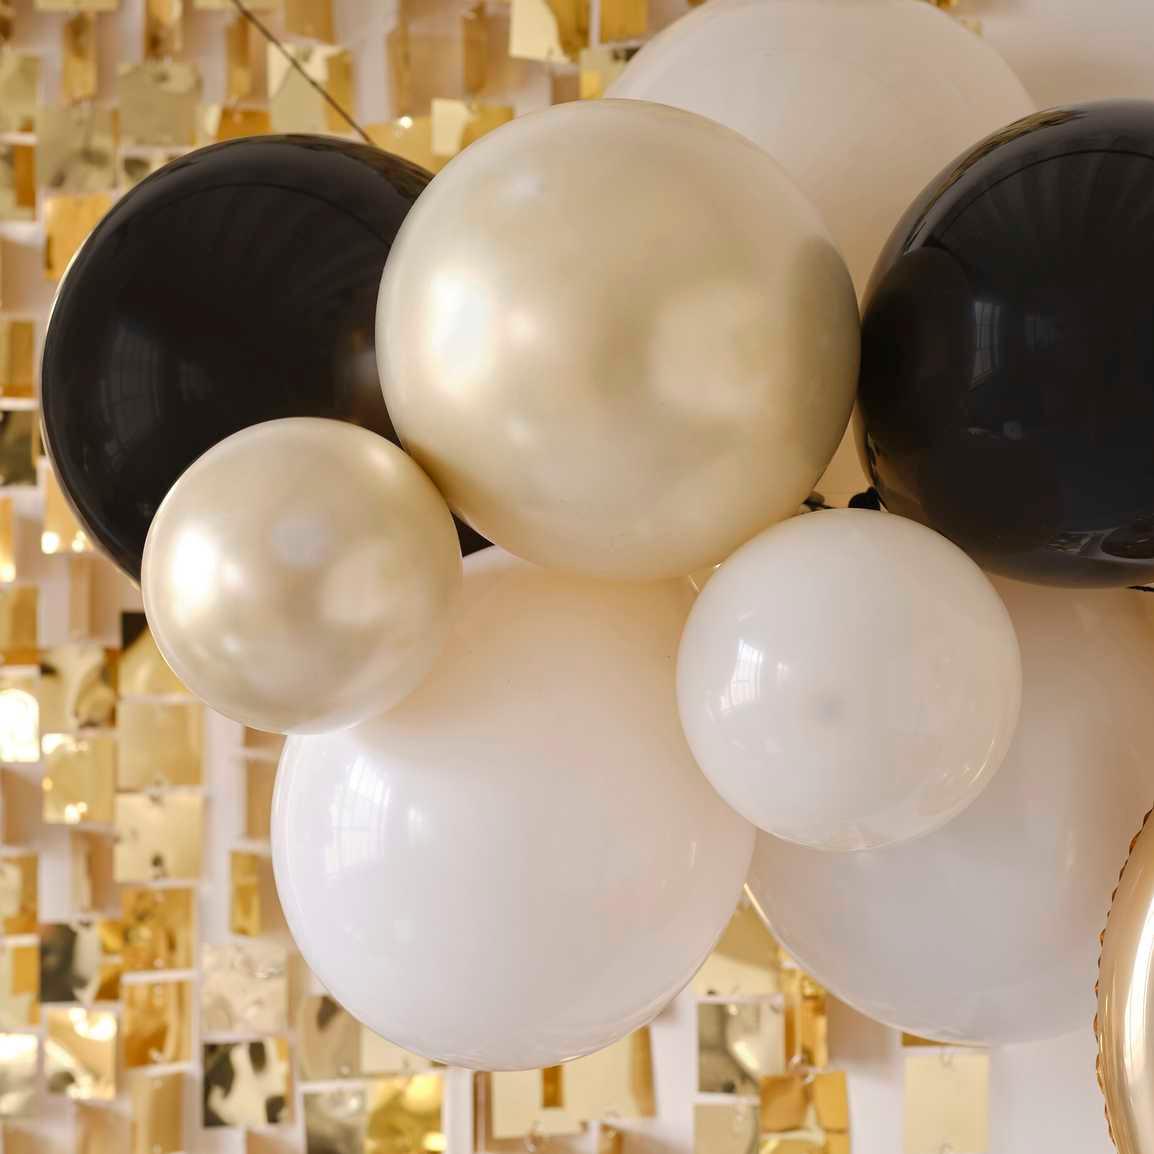 40th Birthday Milestone Balloon Bunting Decoration - The Party Room